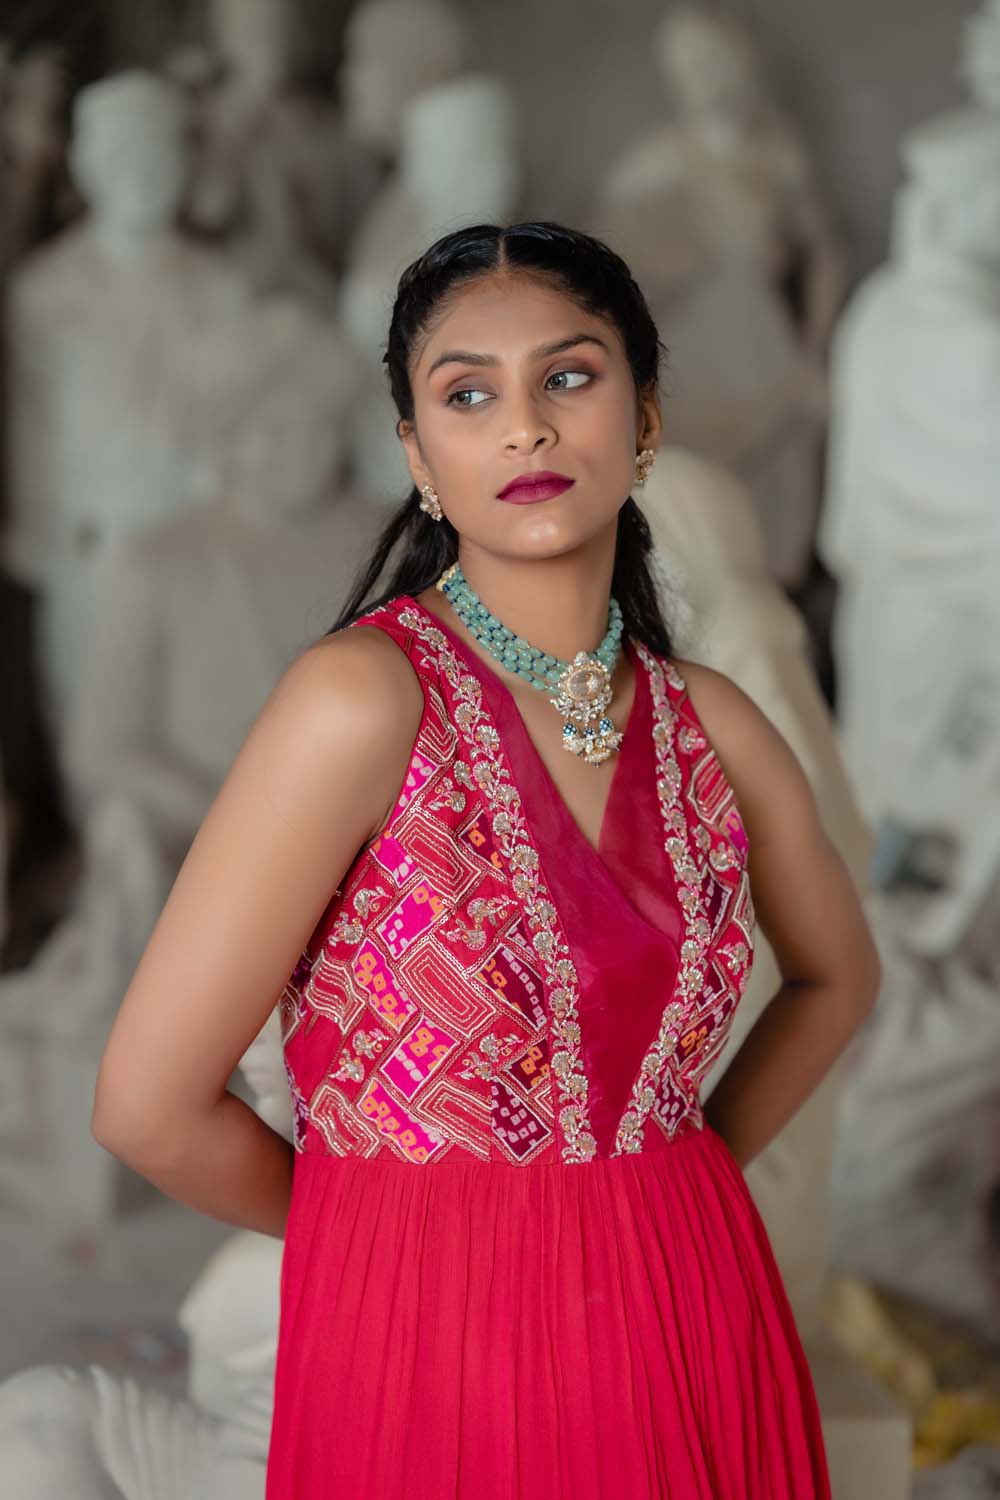 Bhuban - Women Sleeveless Hot Pink Anarkali Suit With Dupatta Set